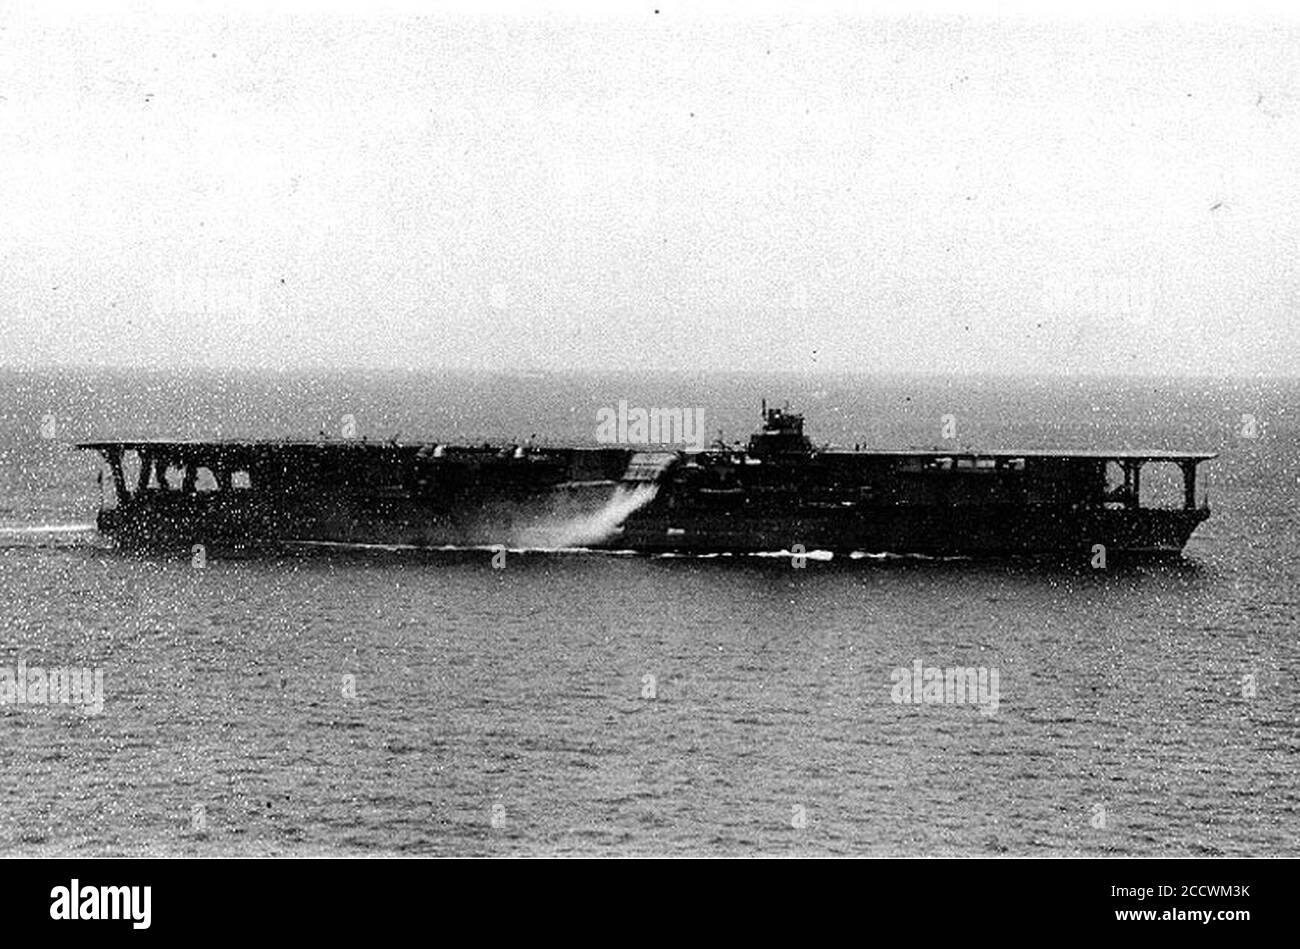 Japanese.aircraft.carrier.kaga (cropped). Stock Photo